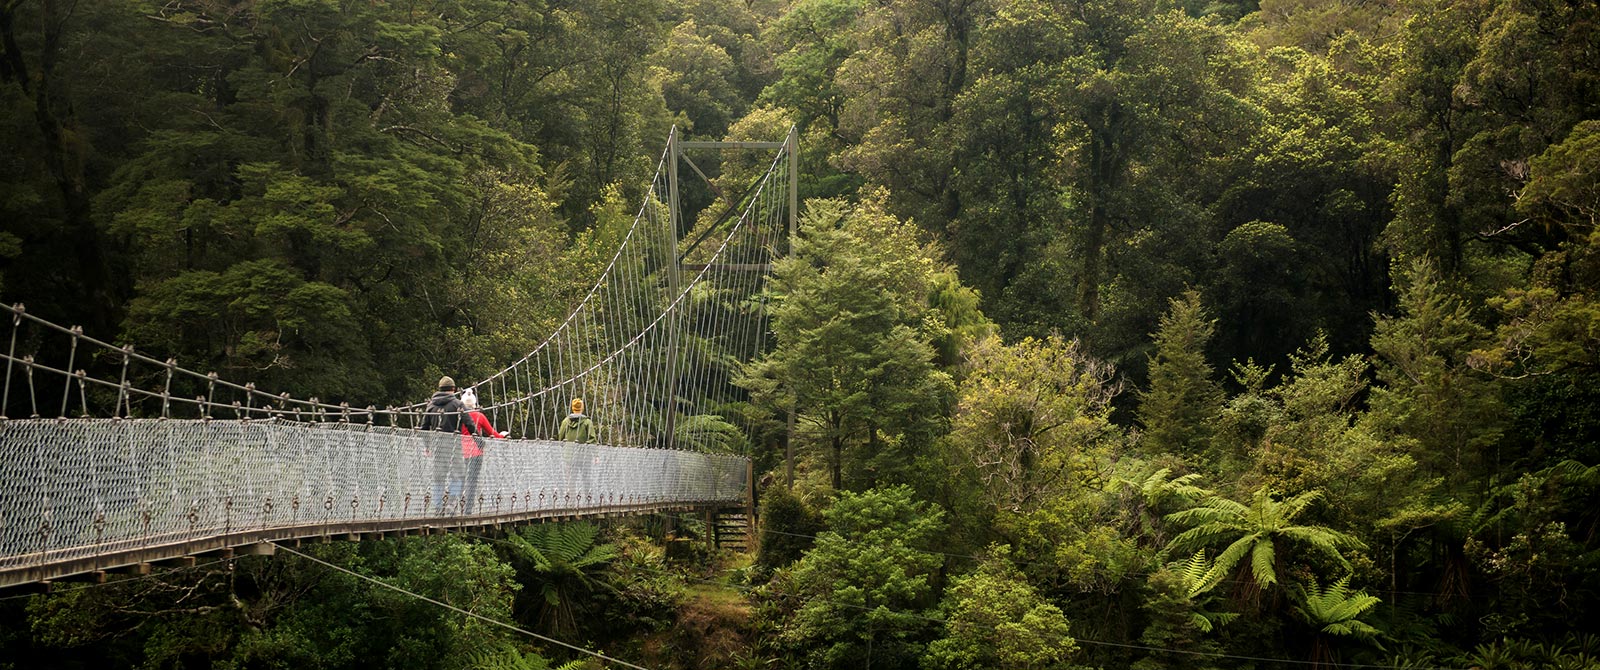 Hollyford Track New Zealand - Swing Bridge Through Native Rainforest